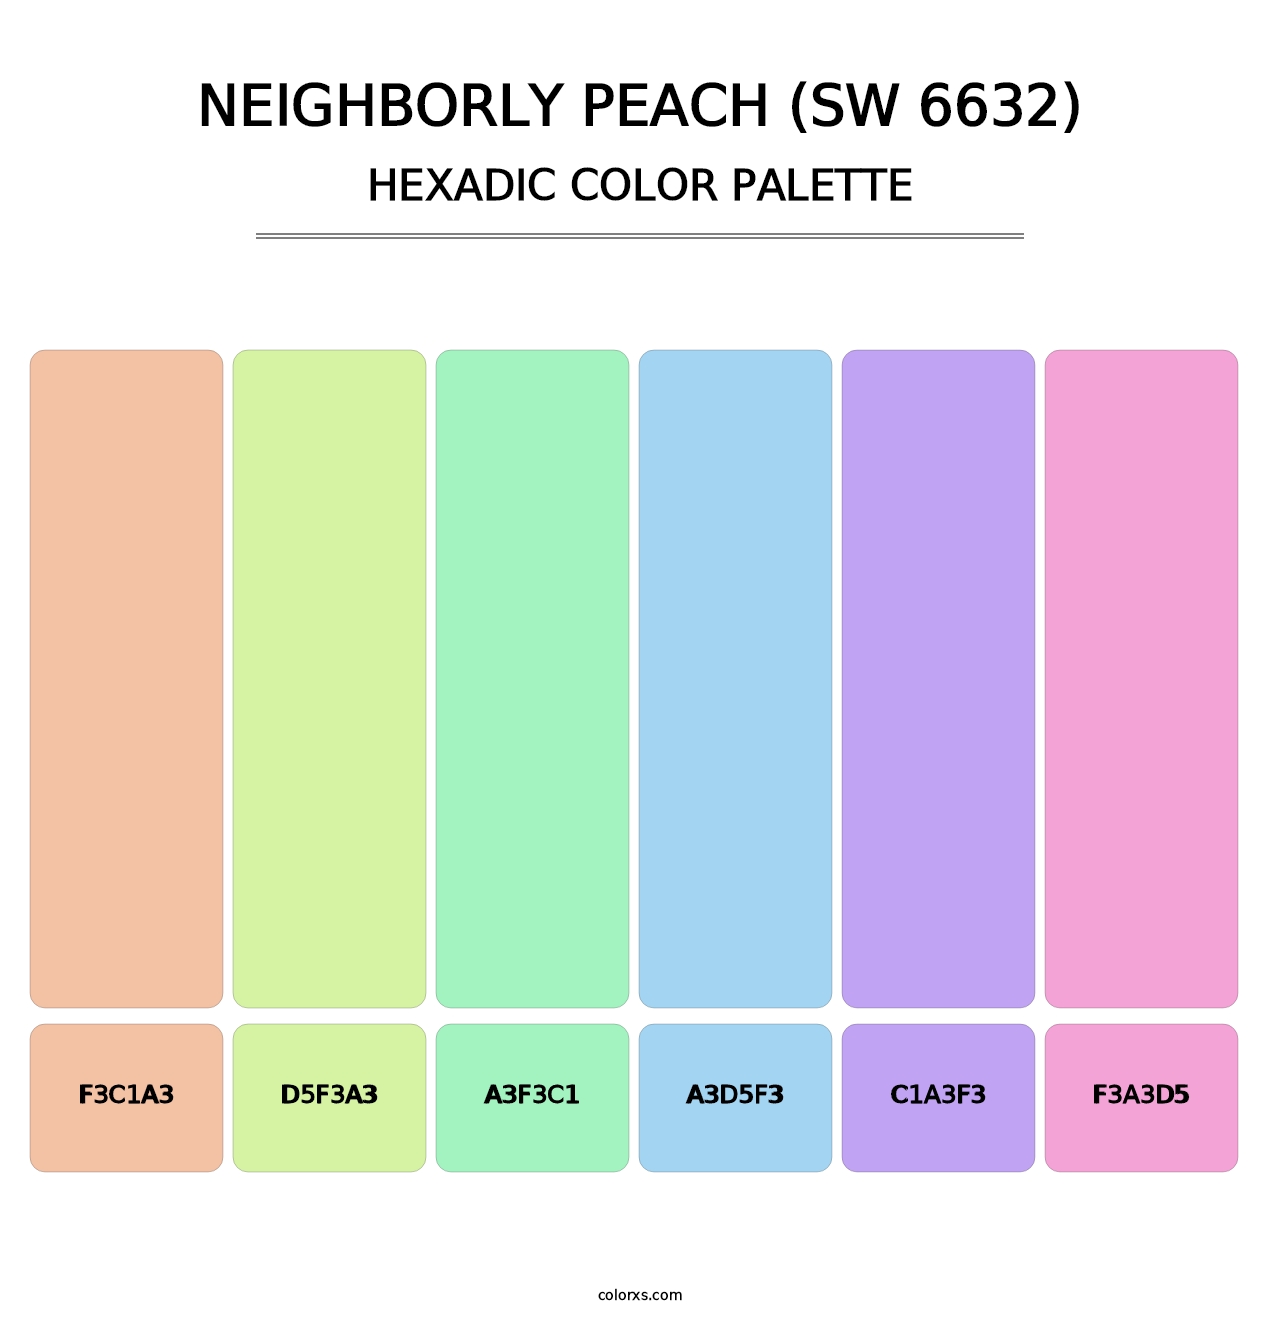 Neighborly Peach (SW 6632) - Hexadic Color Palette